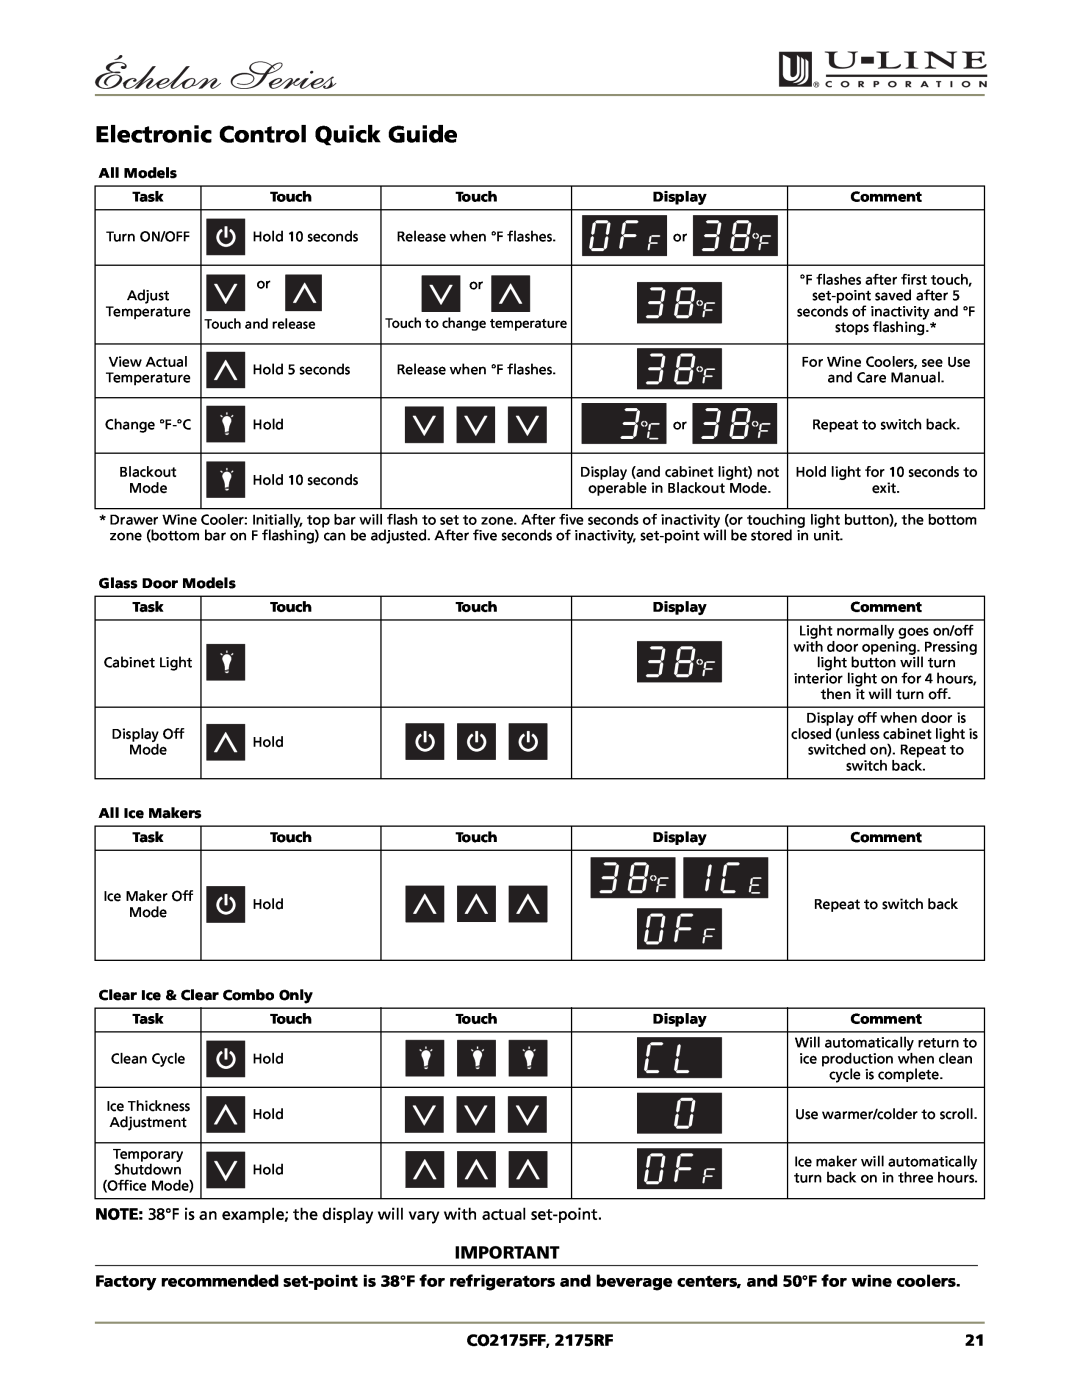 U-Line CO2175RF manual Electronic Control Quick Guide, CO2175FF, 2175RF 